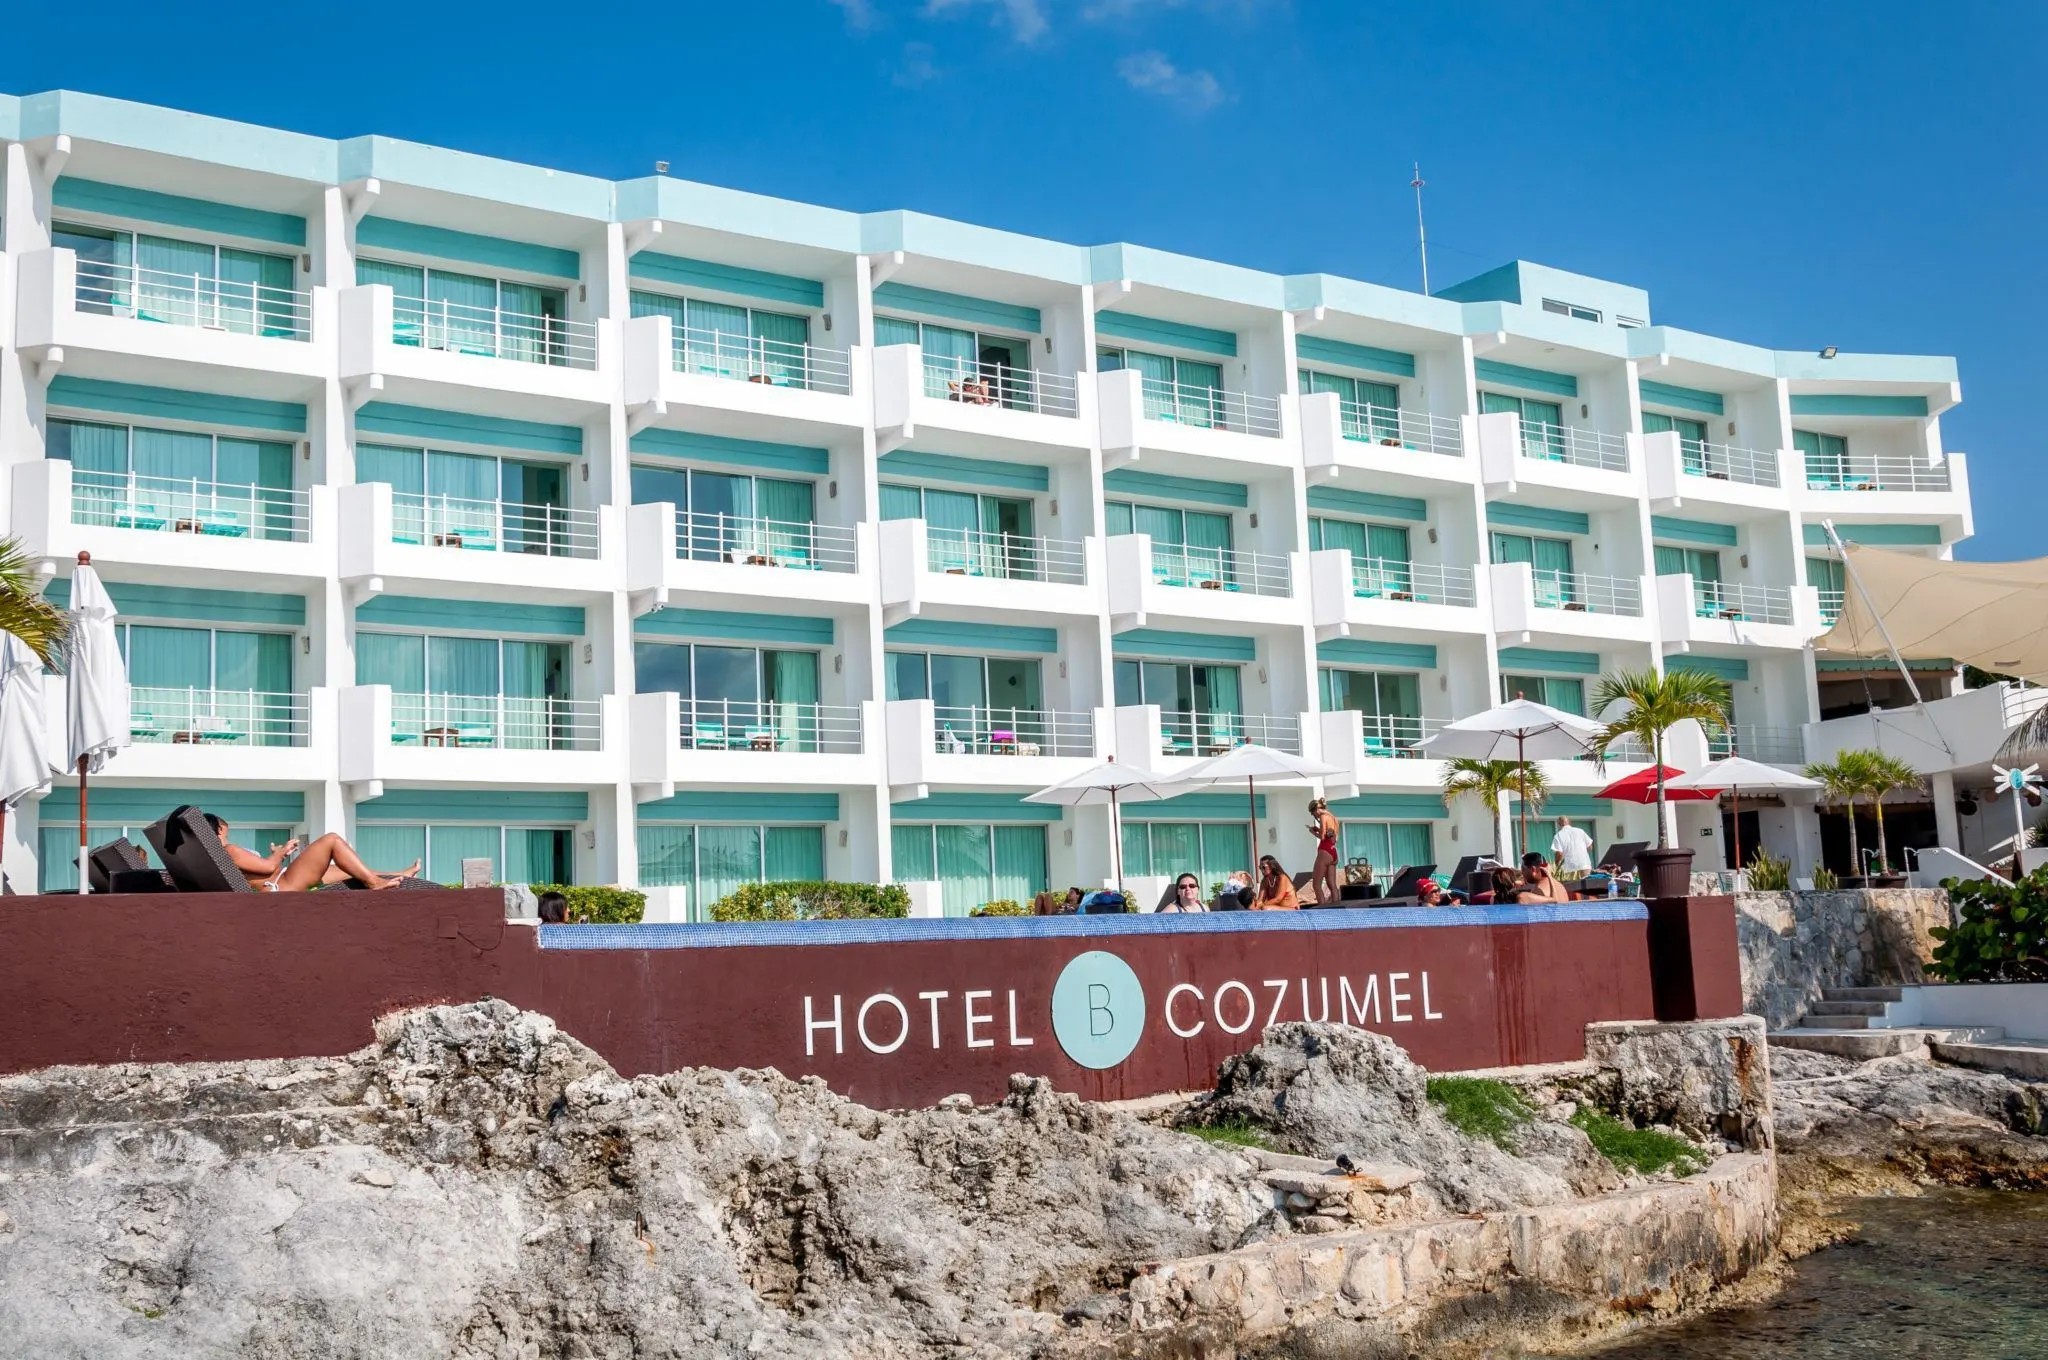 The beachfront Hotel B Cozumel